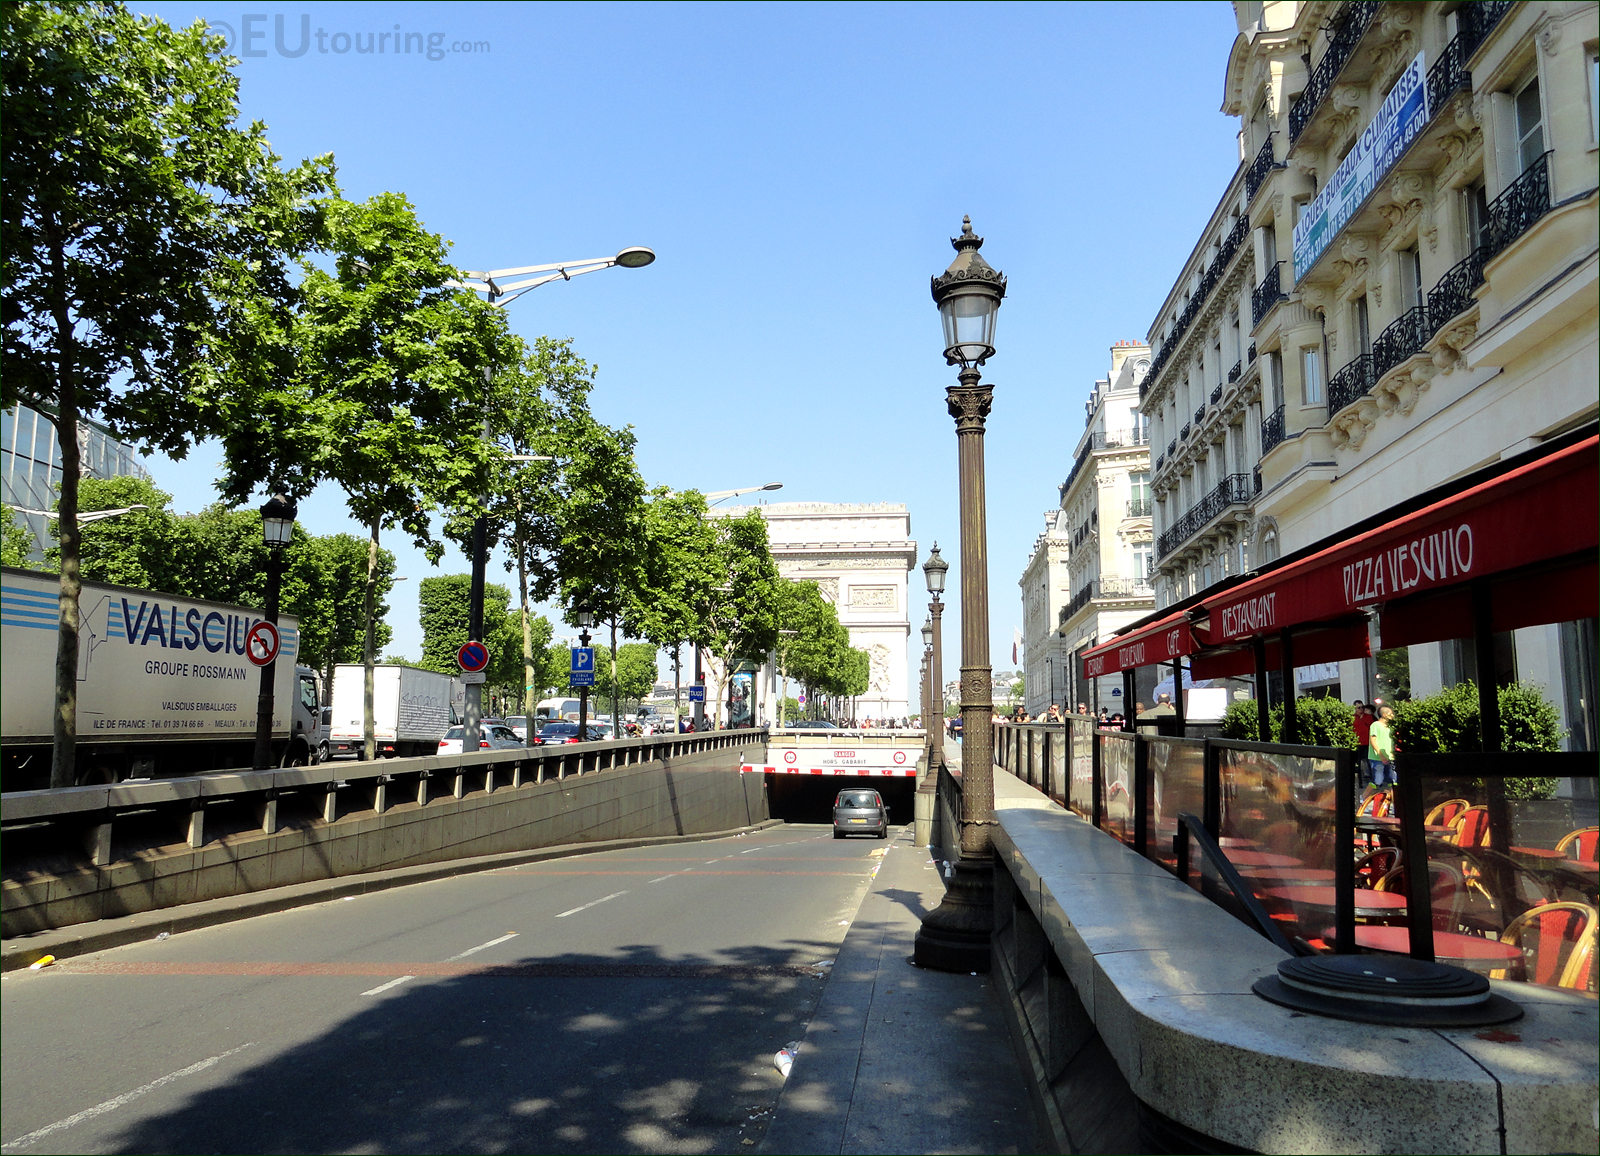 Champs-Elysees  Streets & Transportation